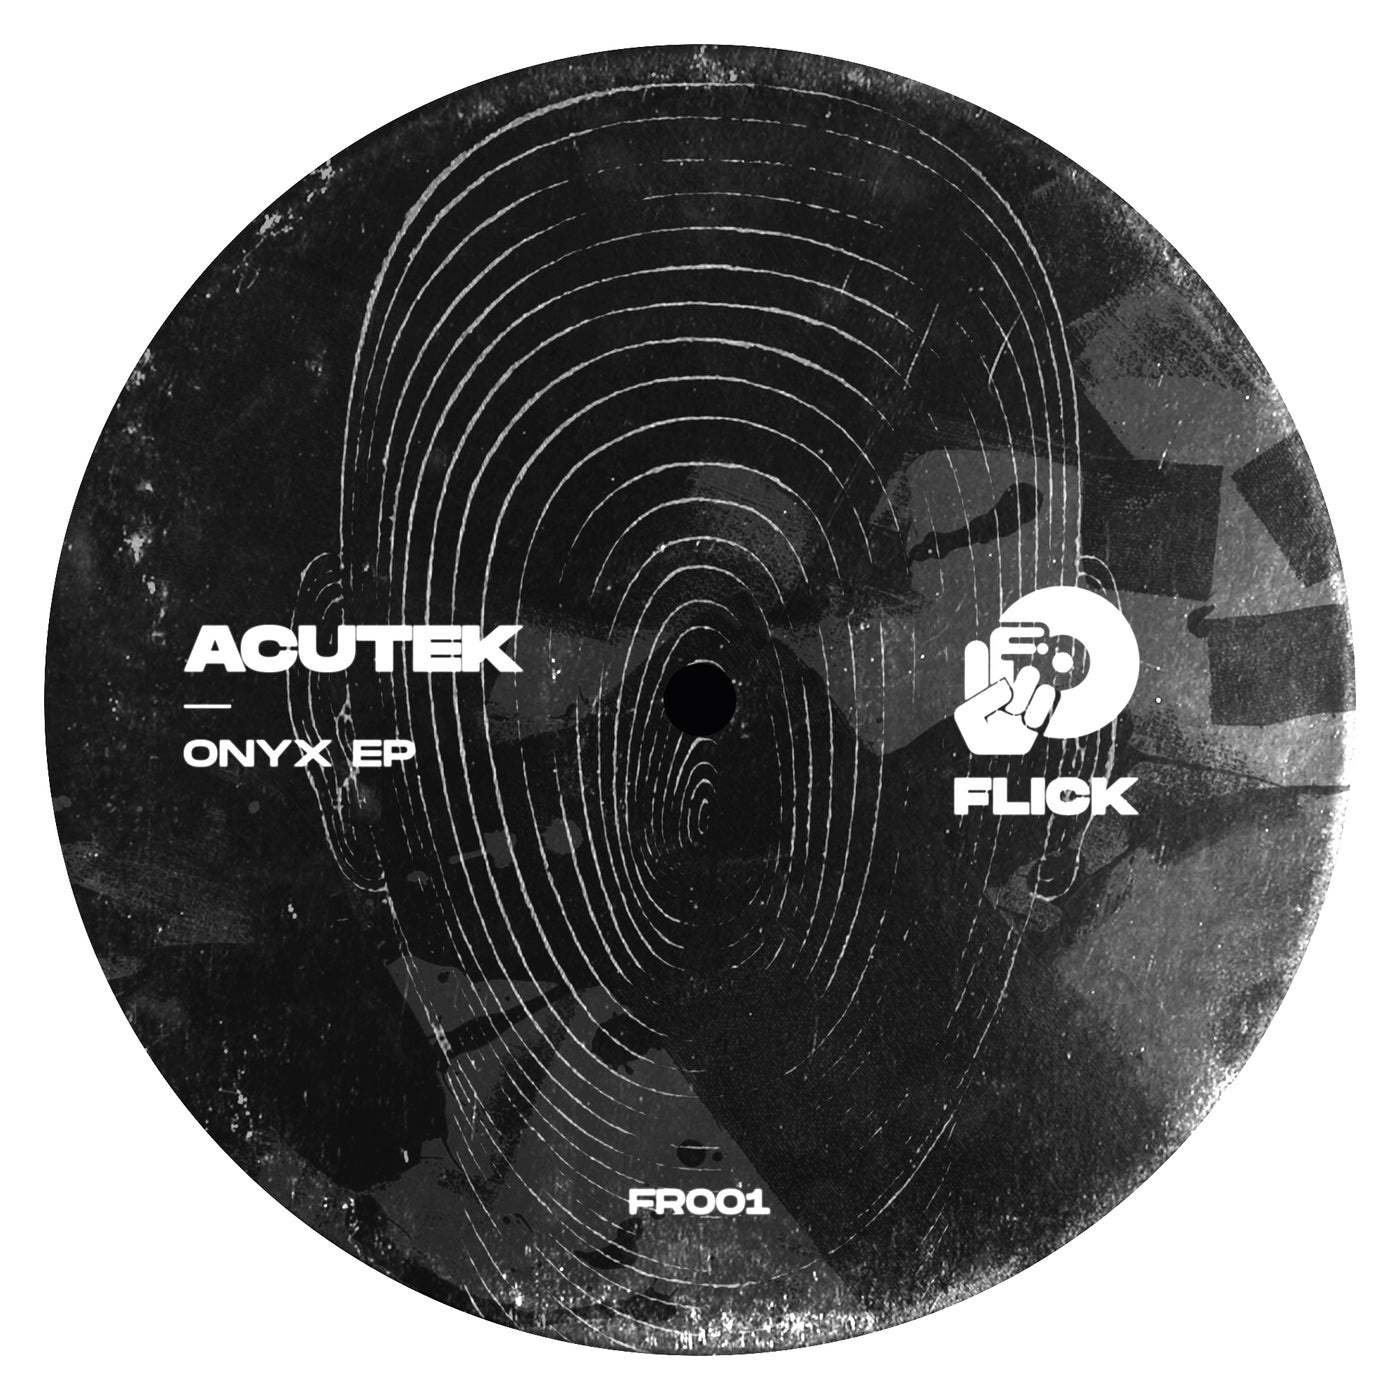 Acutek - Onyx EP [FR001]